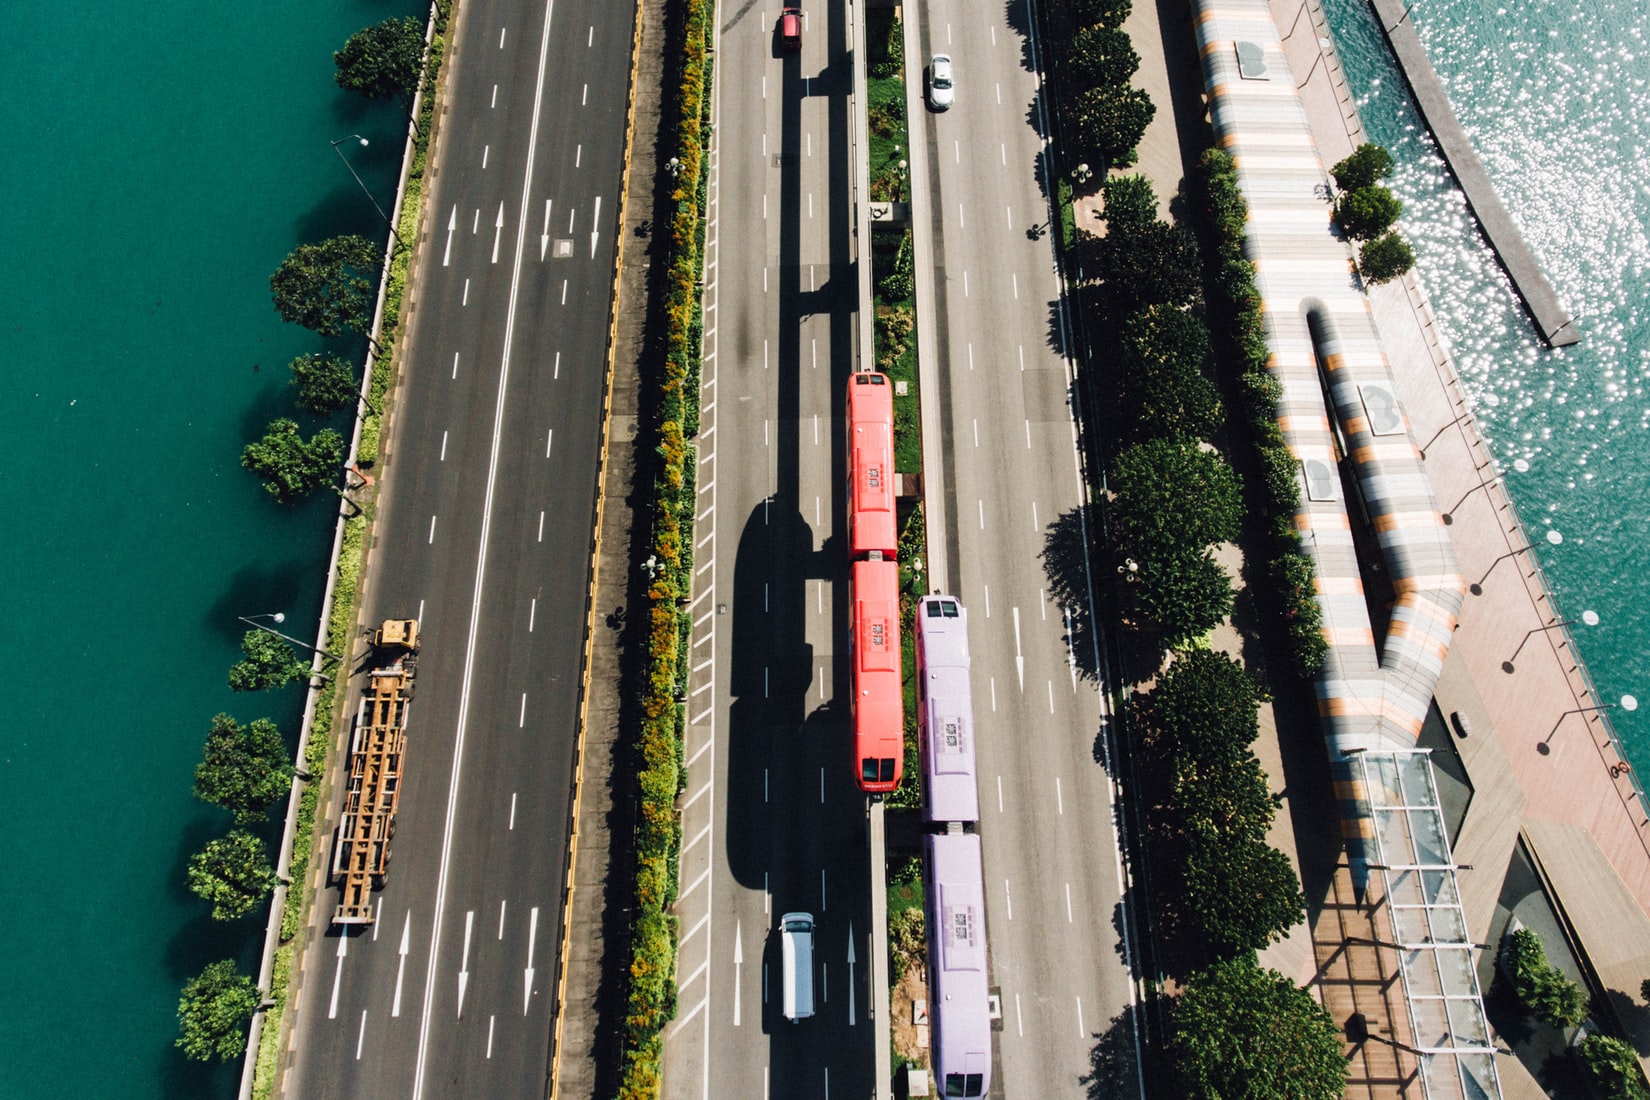 Highway, trains 